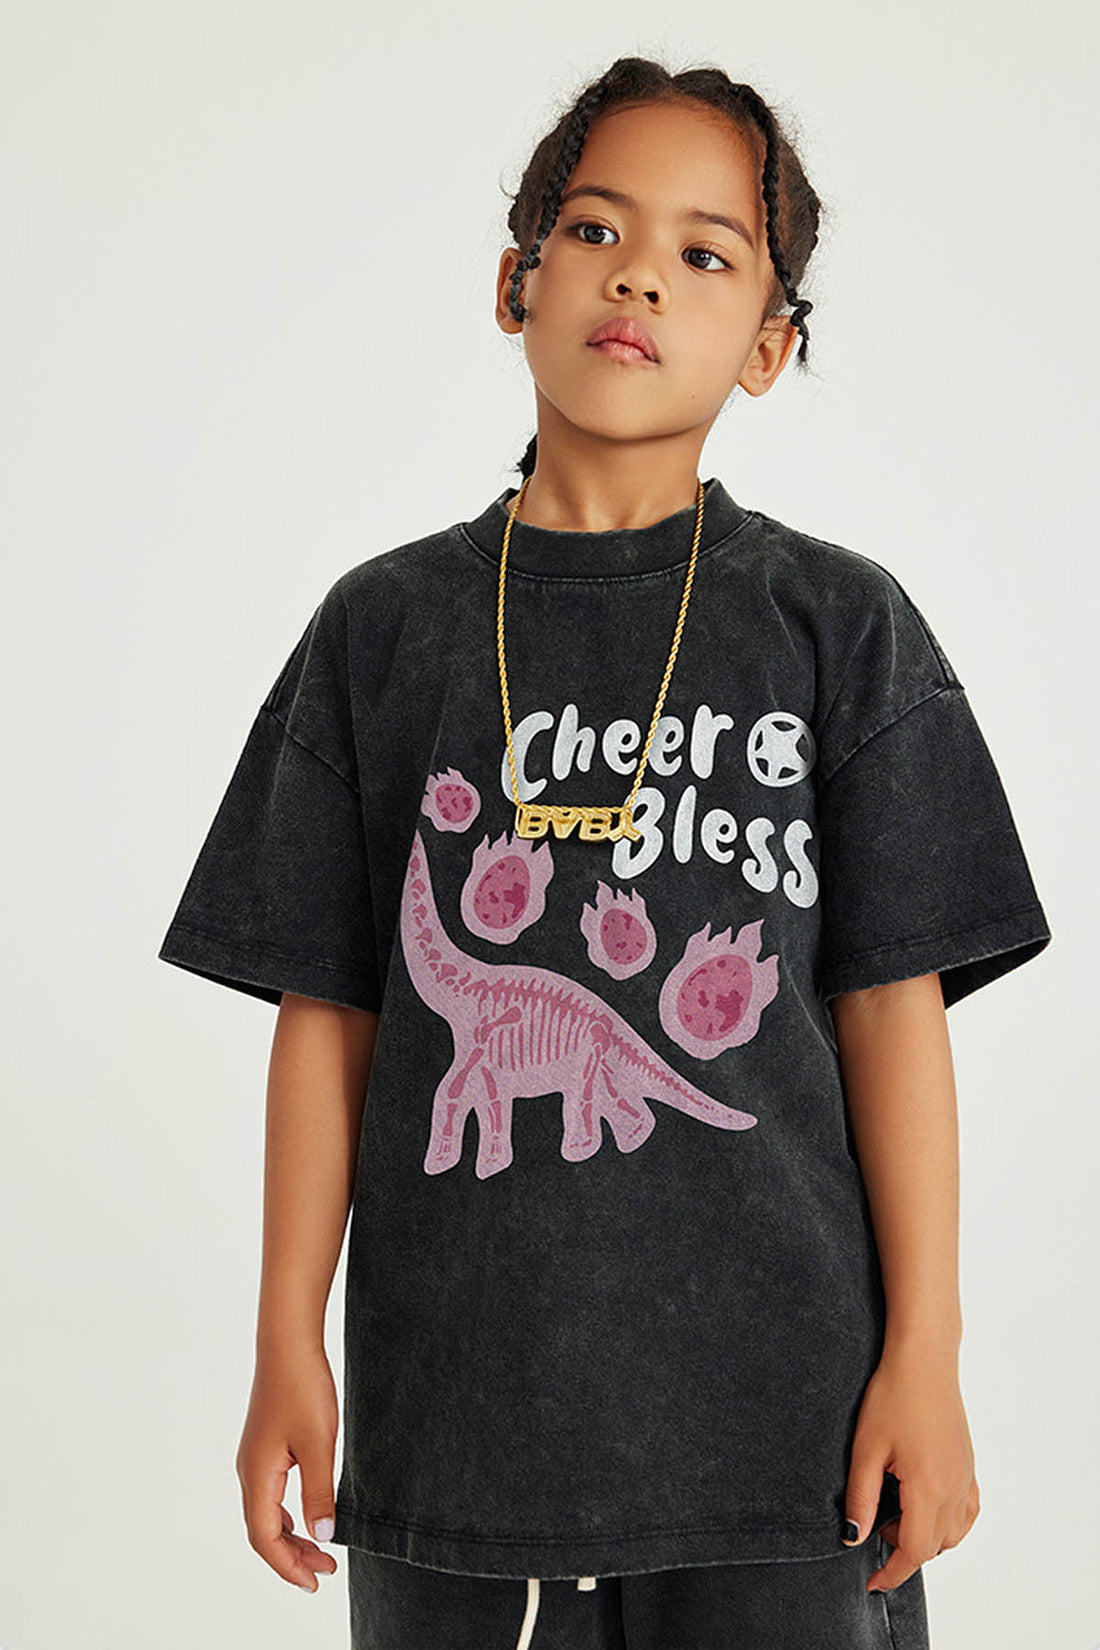 270G Washed Distressed Dinosaur Print Kids T-Shirt